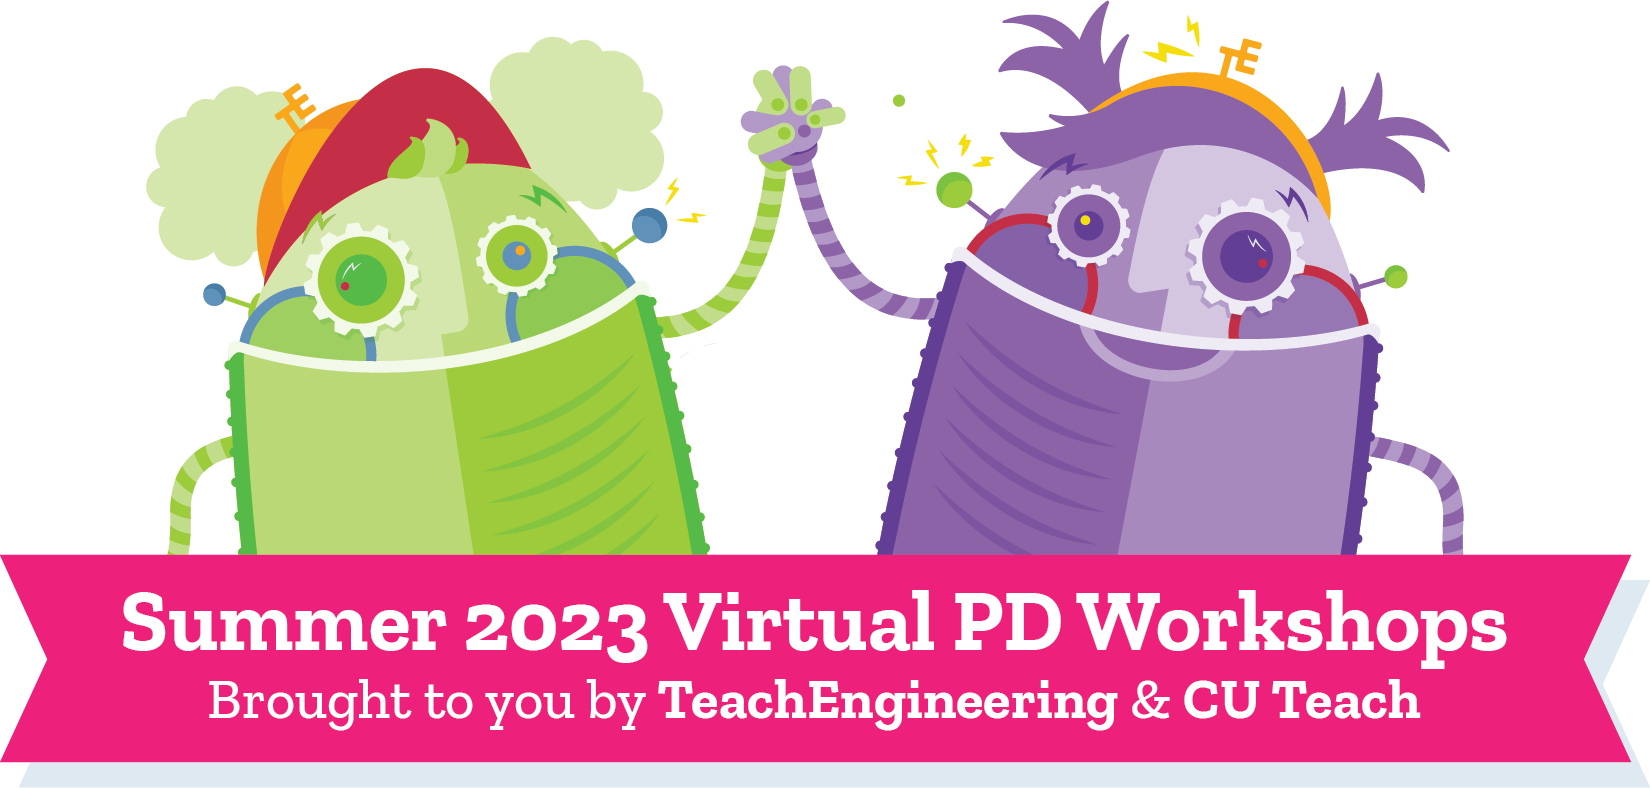 teachengineering logo for summer 2022 teacher professional development workshops 